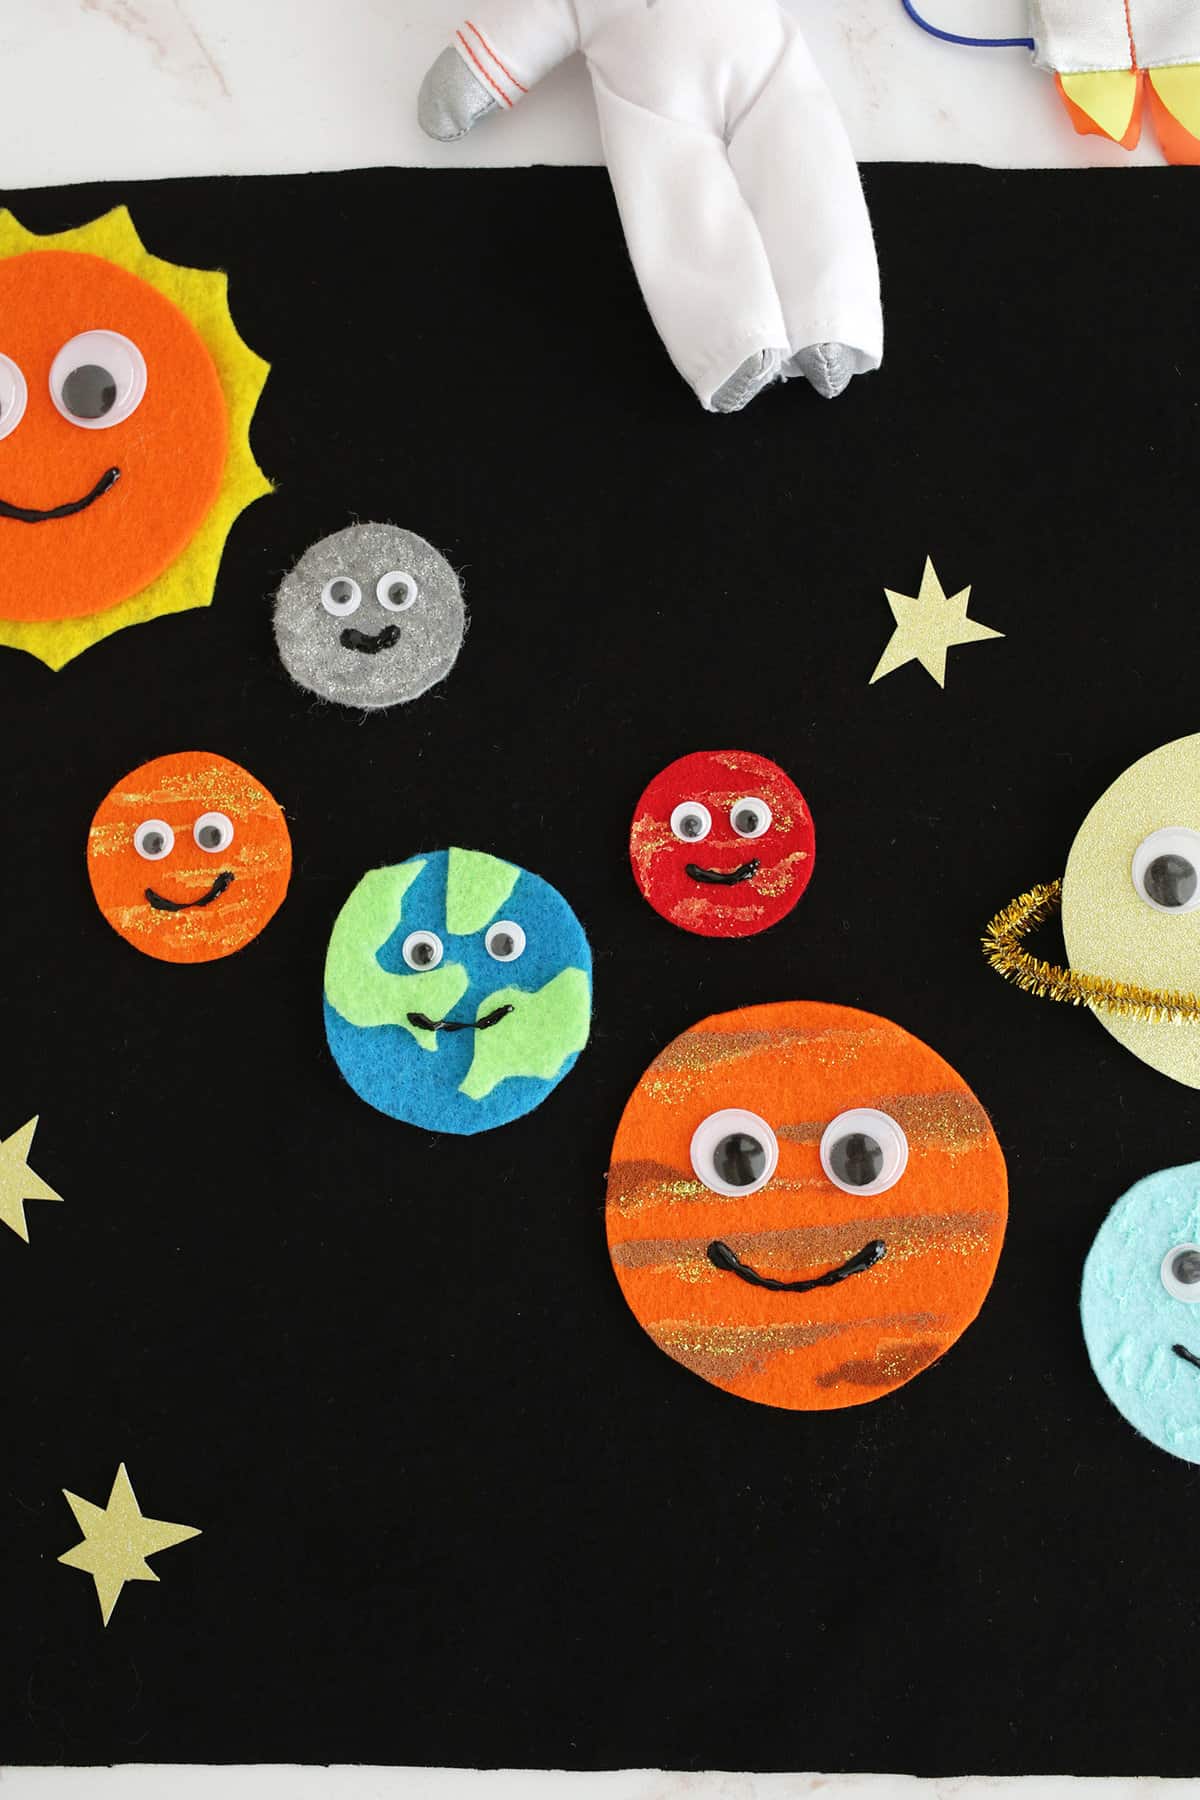 felt board solar system craft for kids